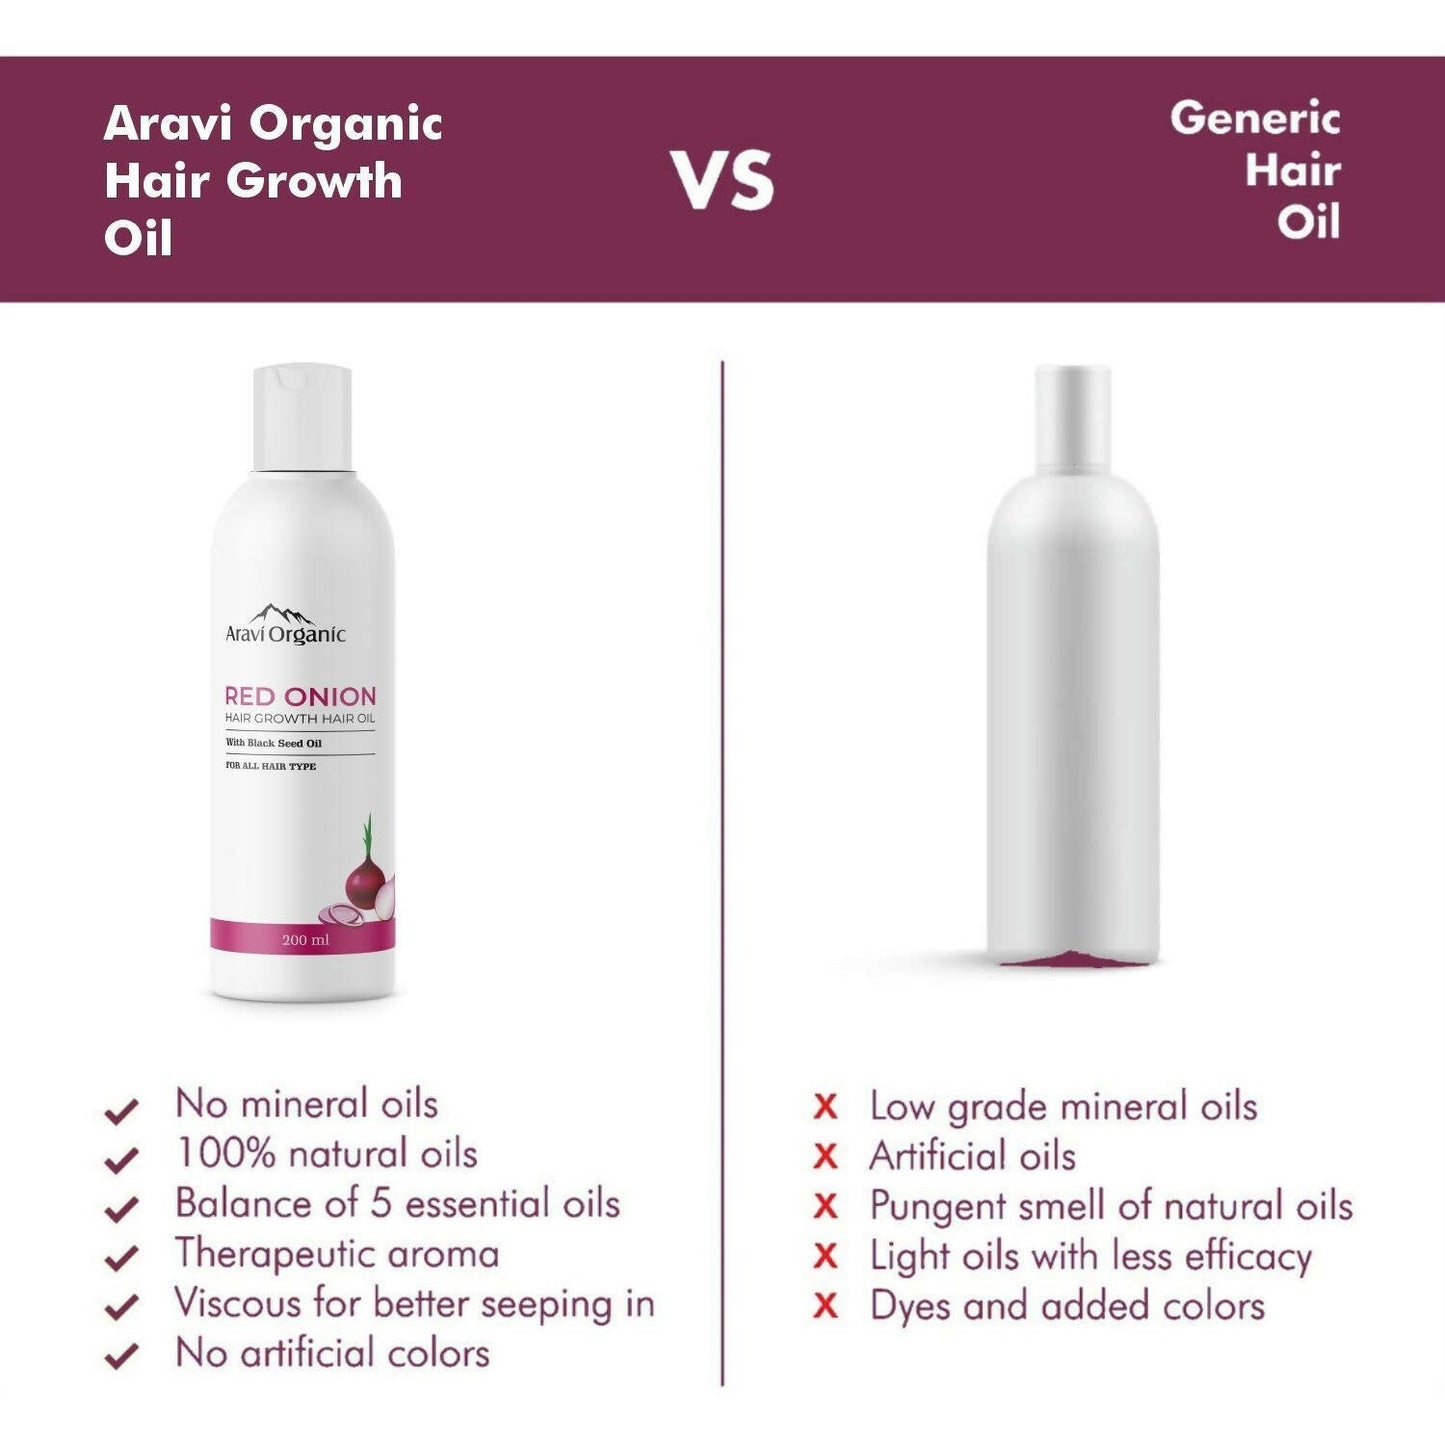 Aravi Organic Hair Growth Hair Oil with Onion Oil